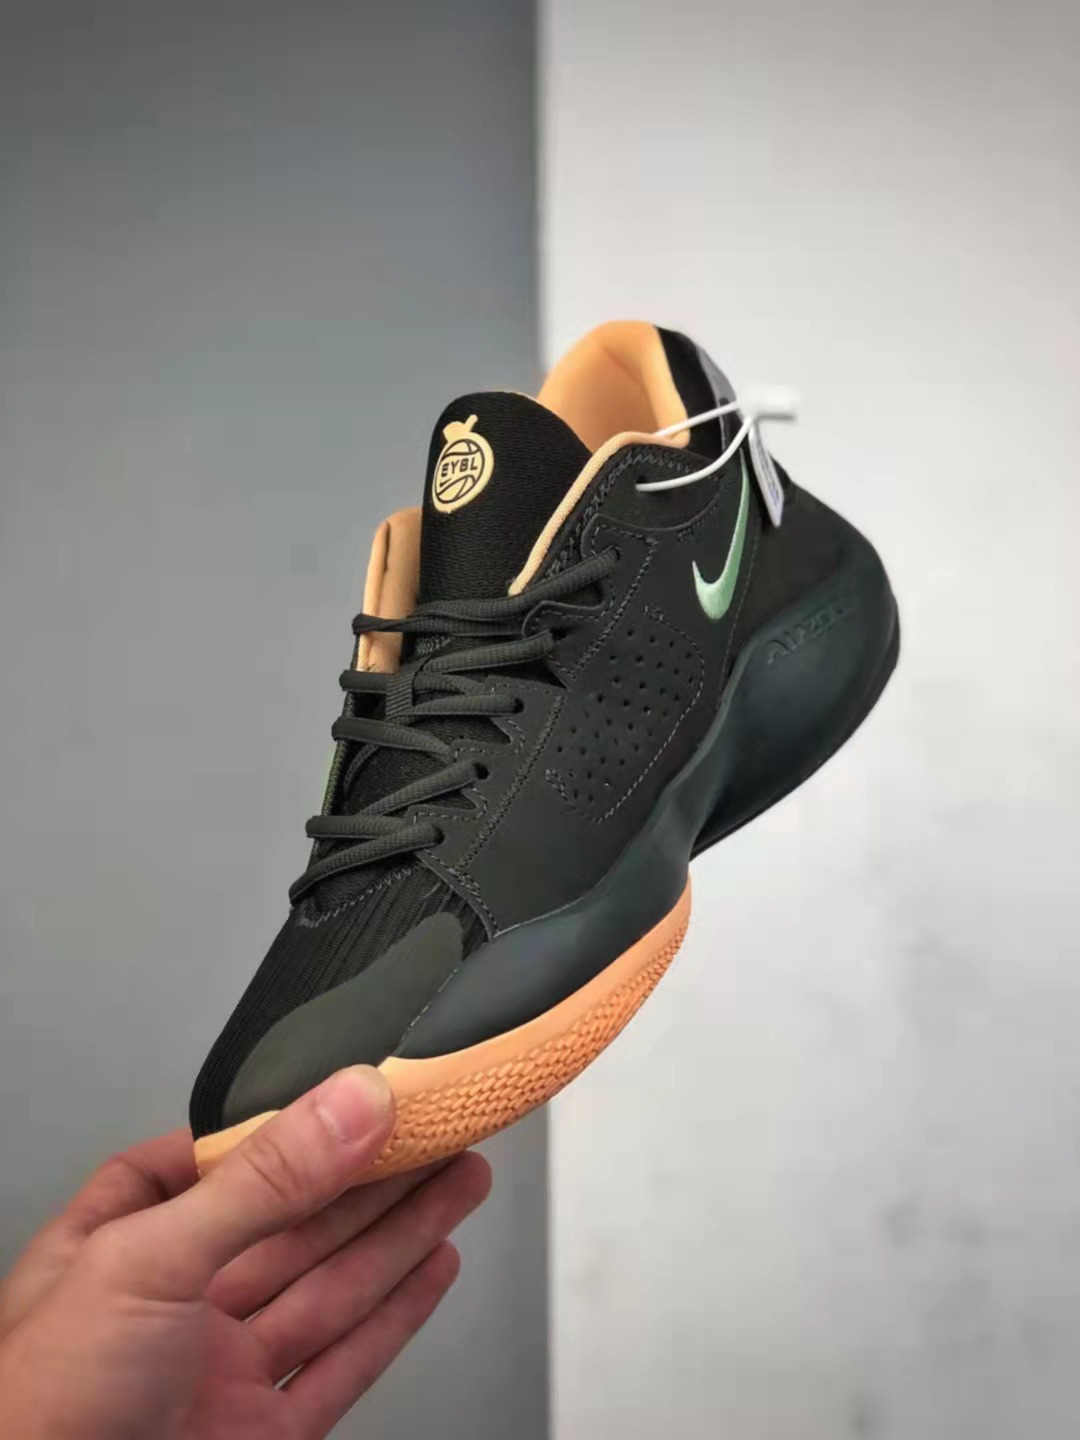 Nike Zoom Freak 2 'EYBL' DA1845 300 - Exclusive Basketball Sneakers